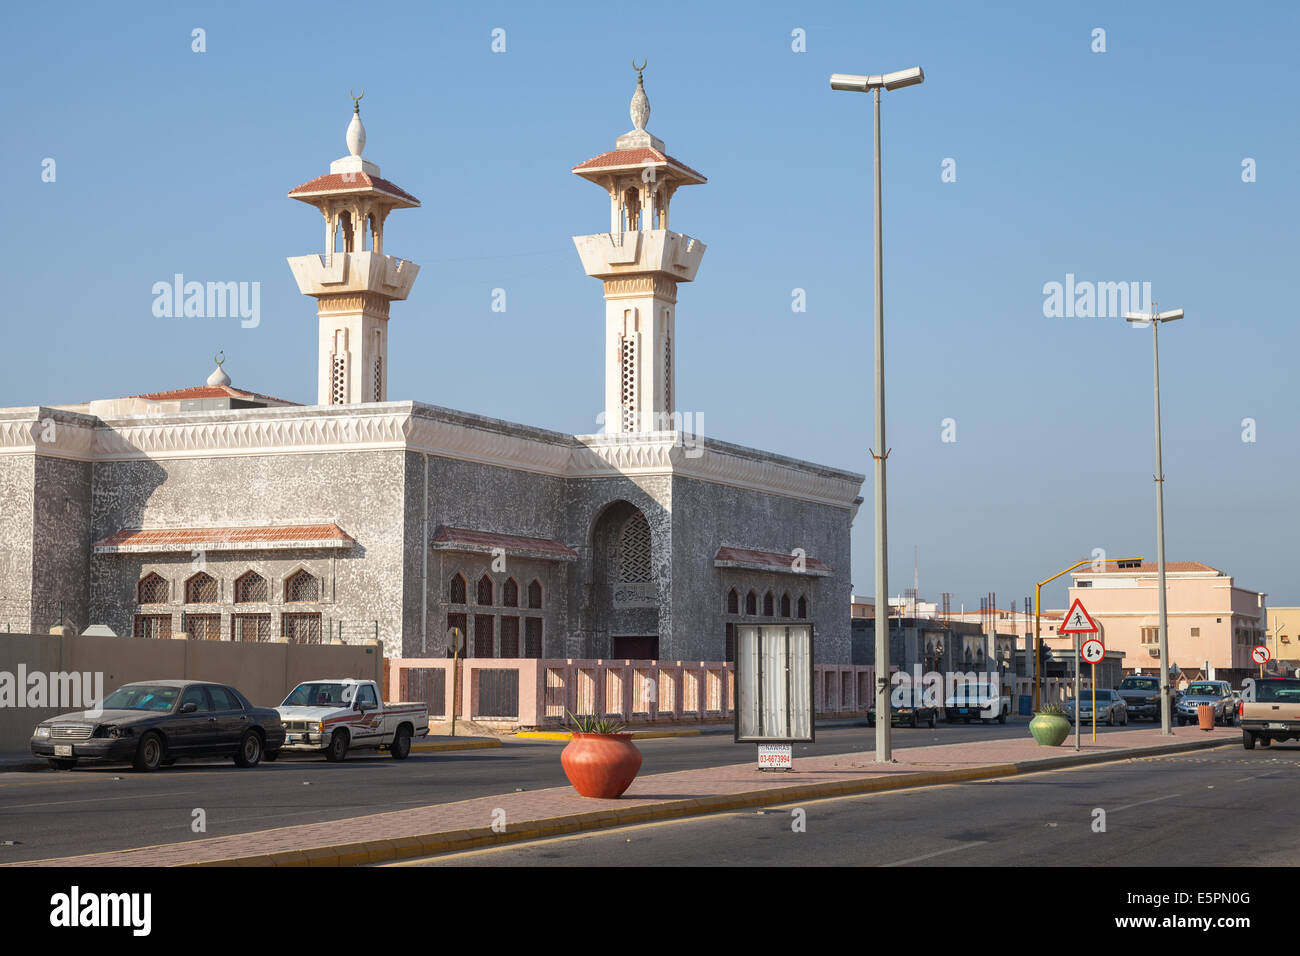 RAHIMA, SAUDI ARABIA - MAY 19, 2014: Street view with Mosque and road, Saudi Arabia Stock Photo